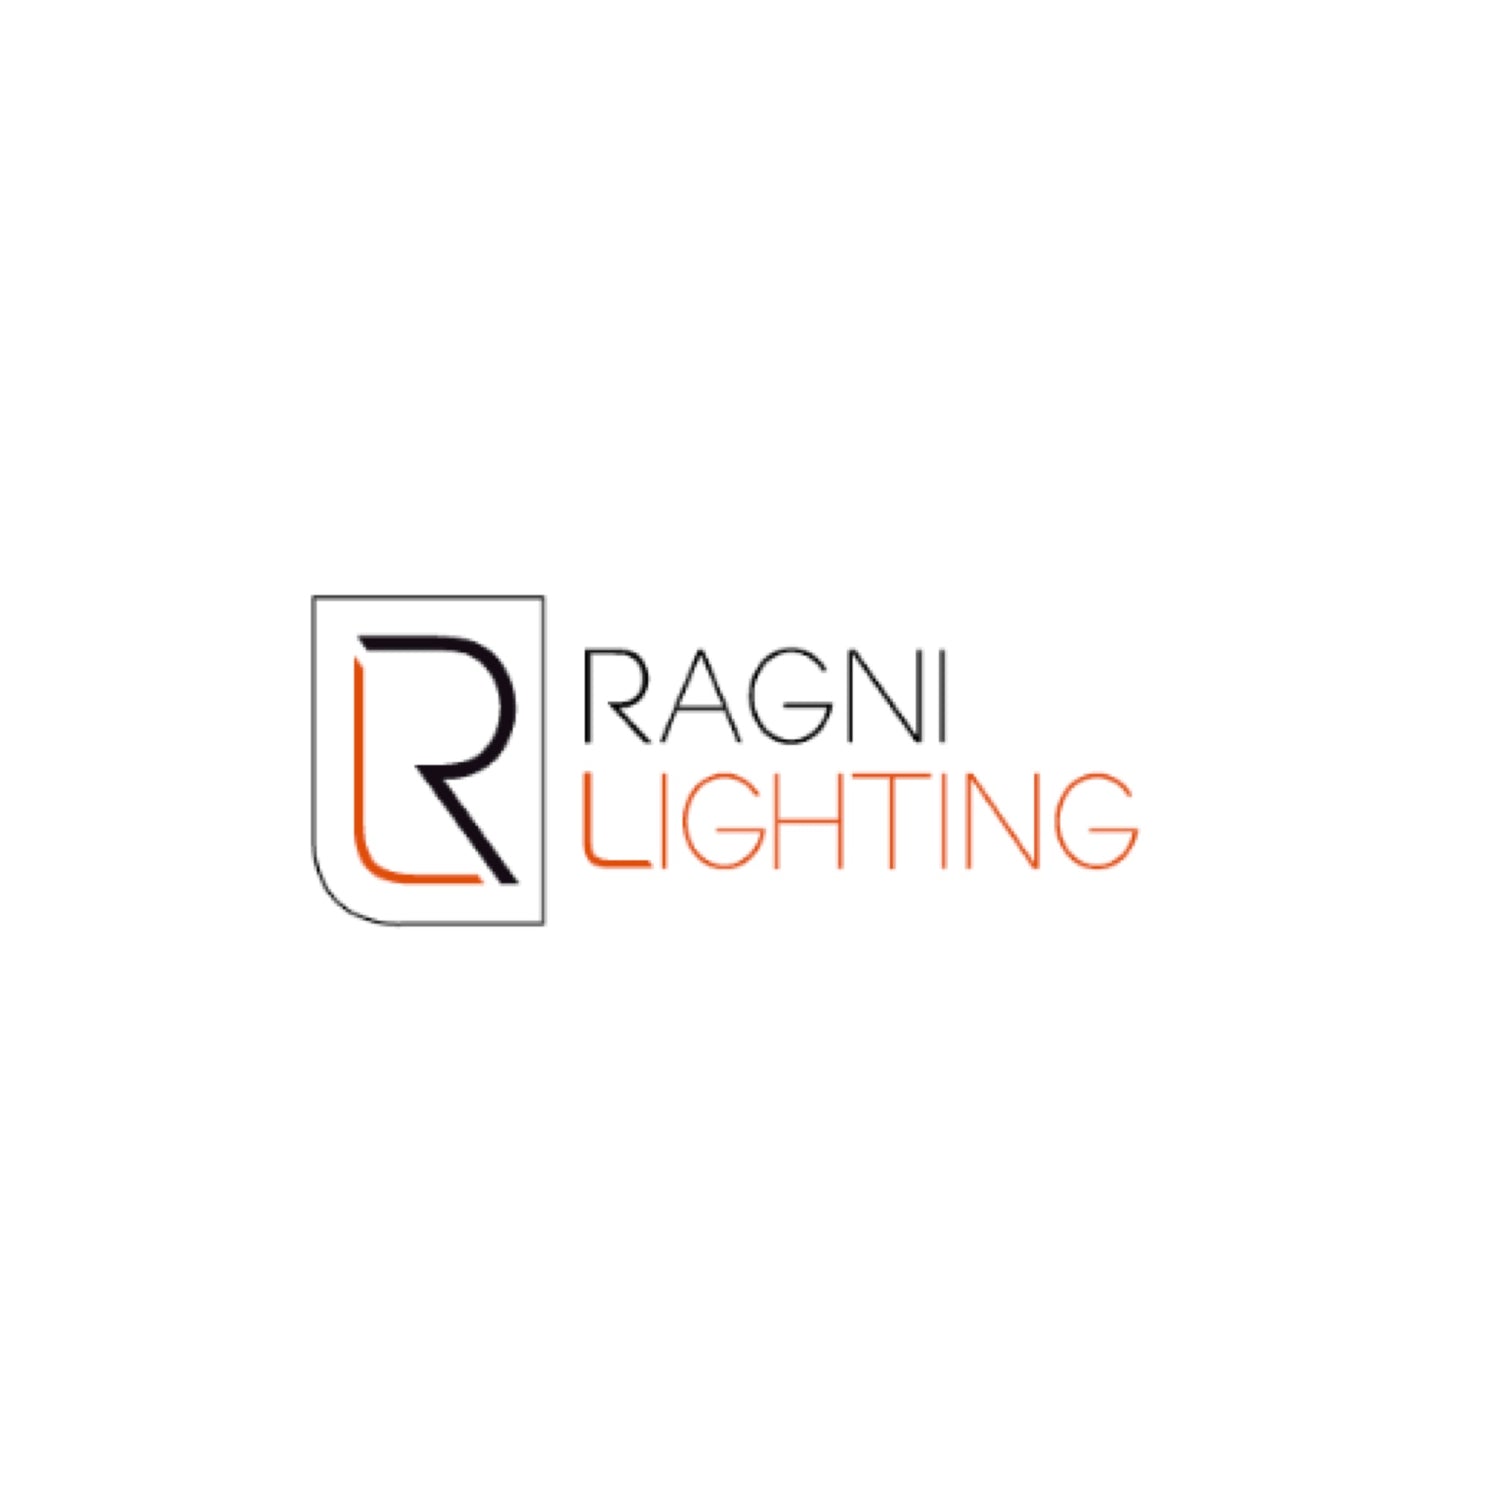 RAGNI LIGHTING INTERNATIONAL LLC